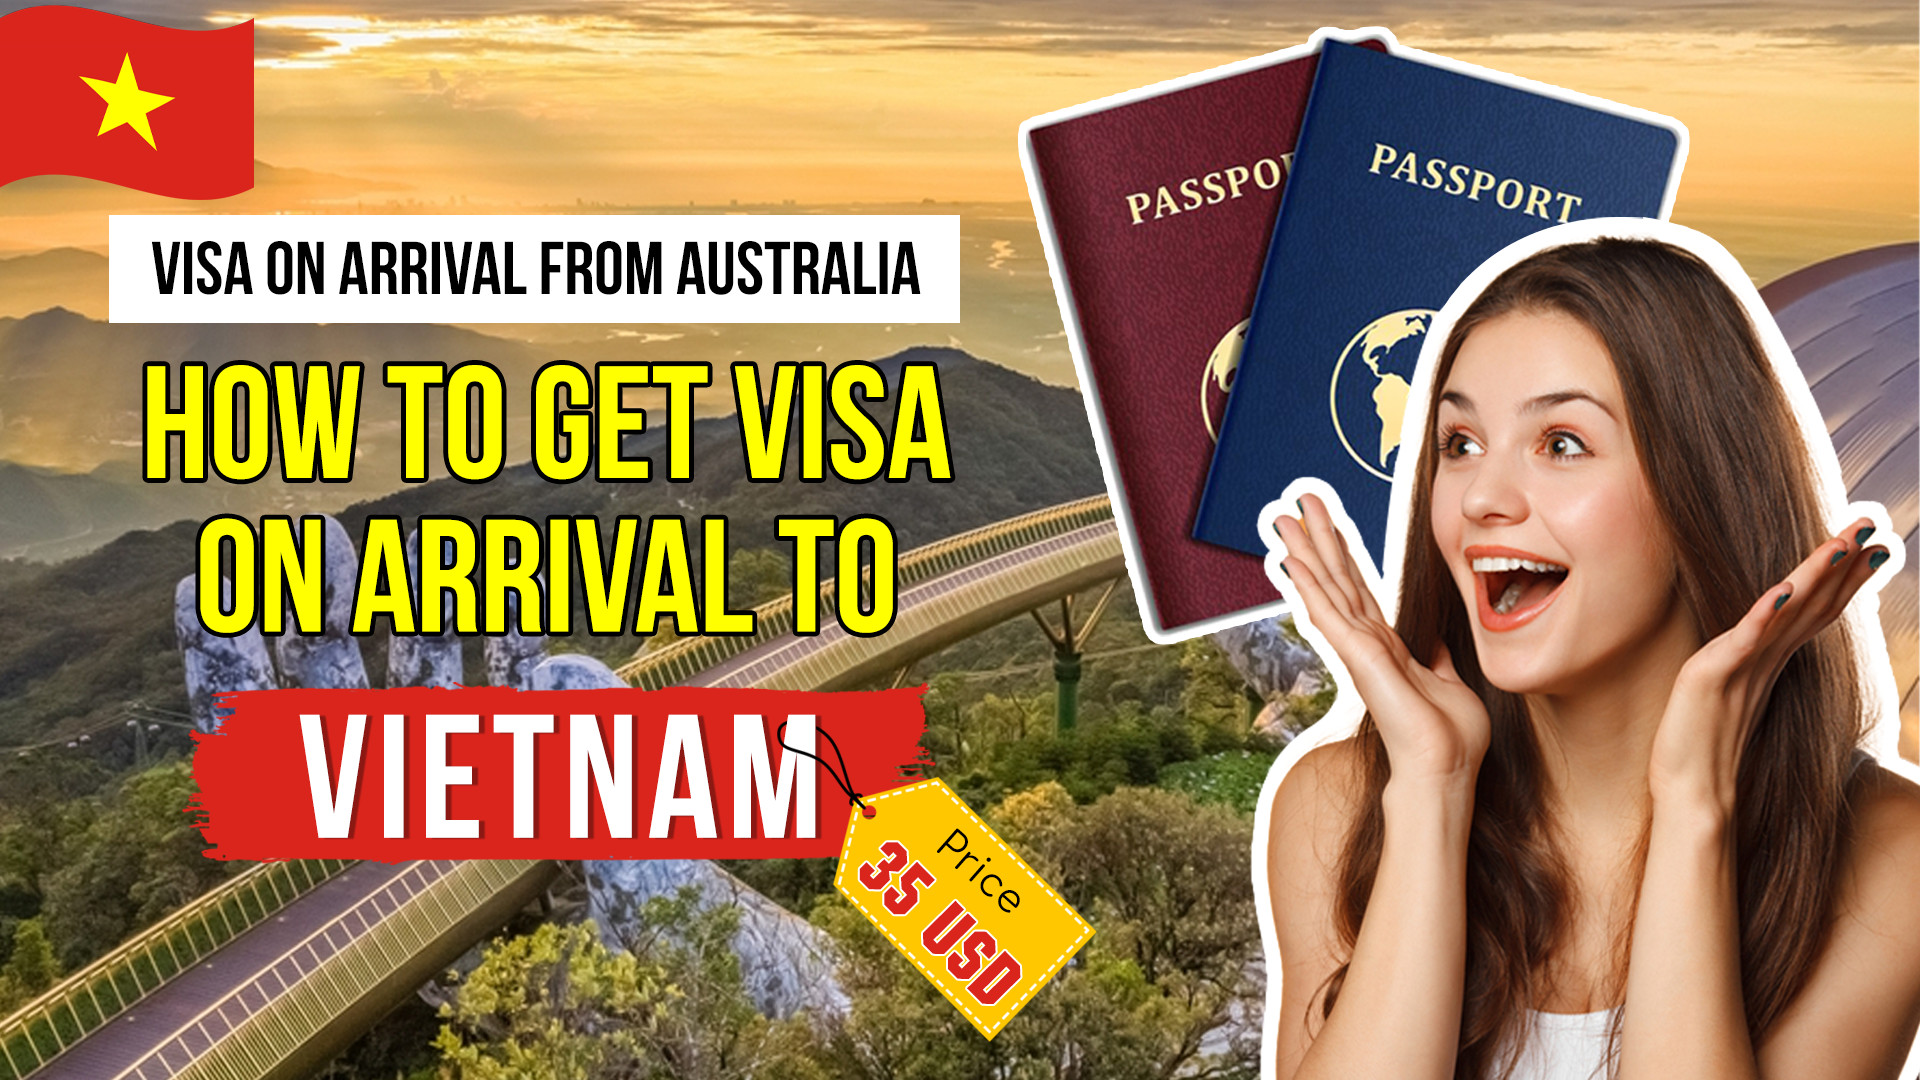 90 days Vietnam Tourist Visa - Why not?